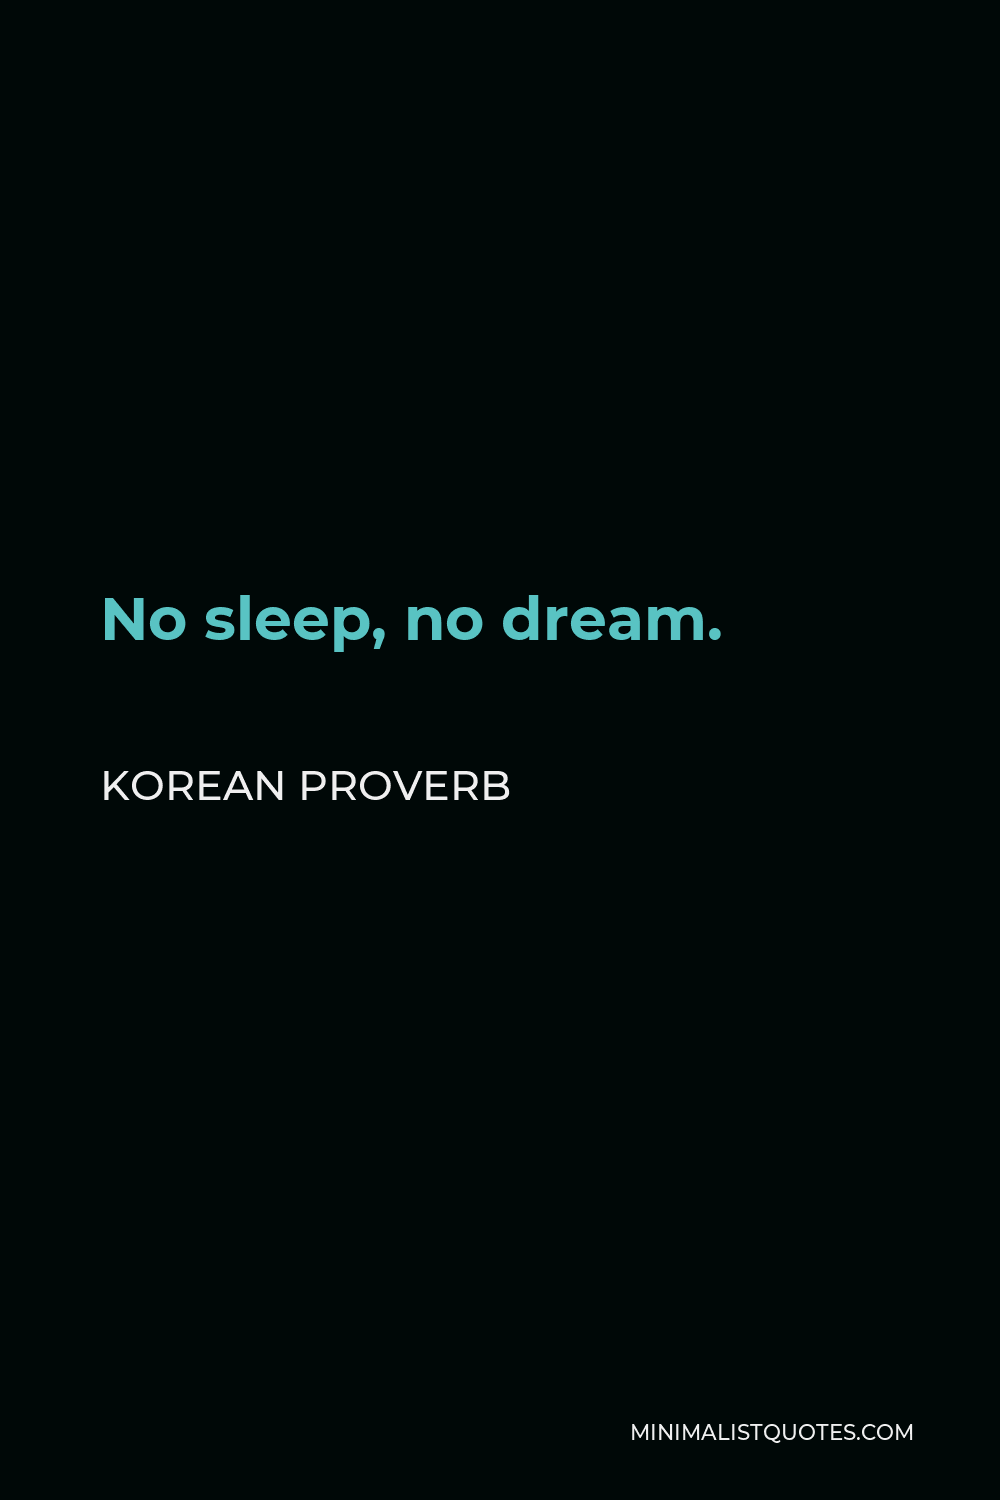 Korean Proverb Quote - No sleep, no dream.